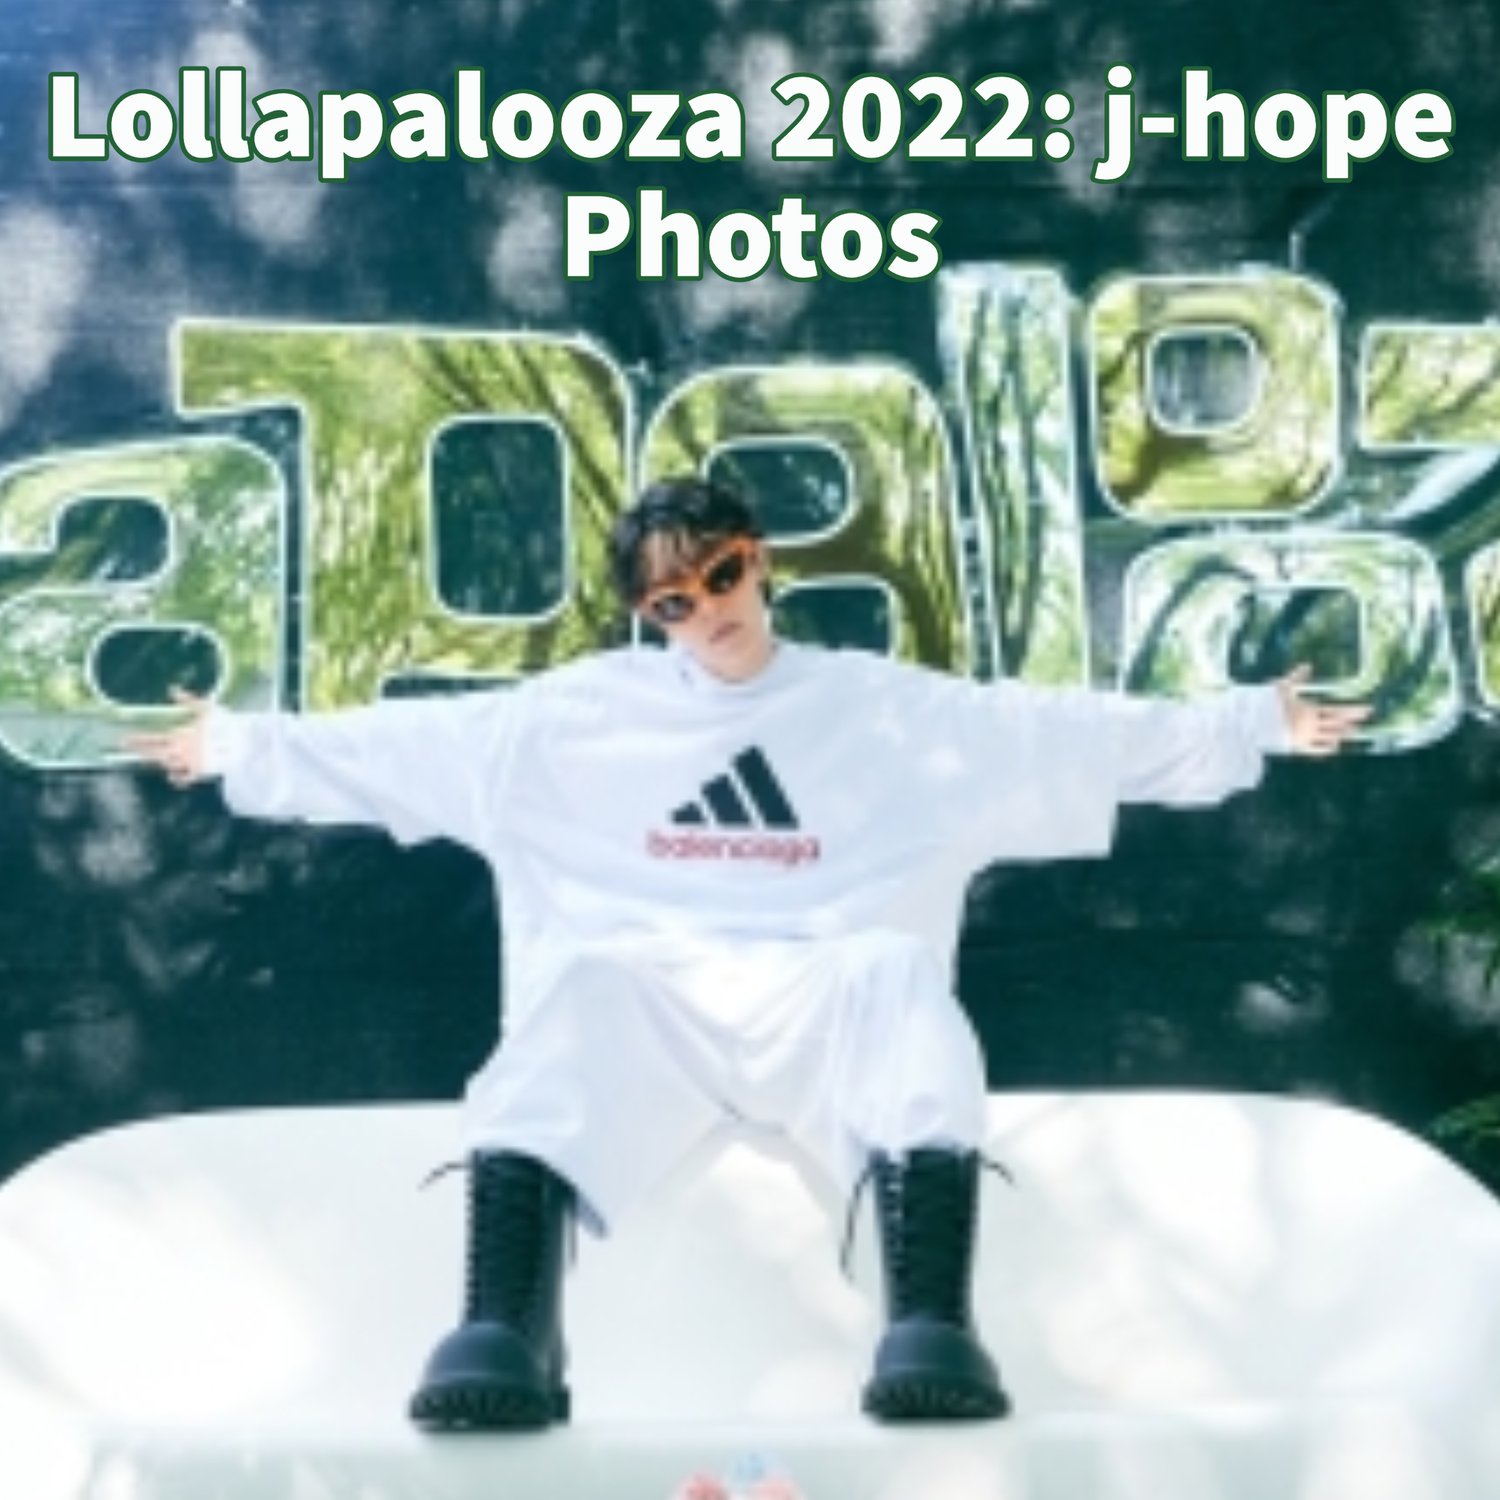 j-hope x dispatch photoshoot at lollapalooza 🤍🧡